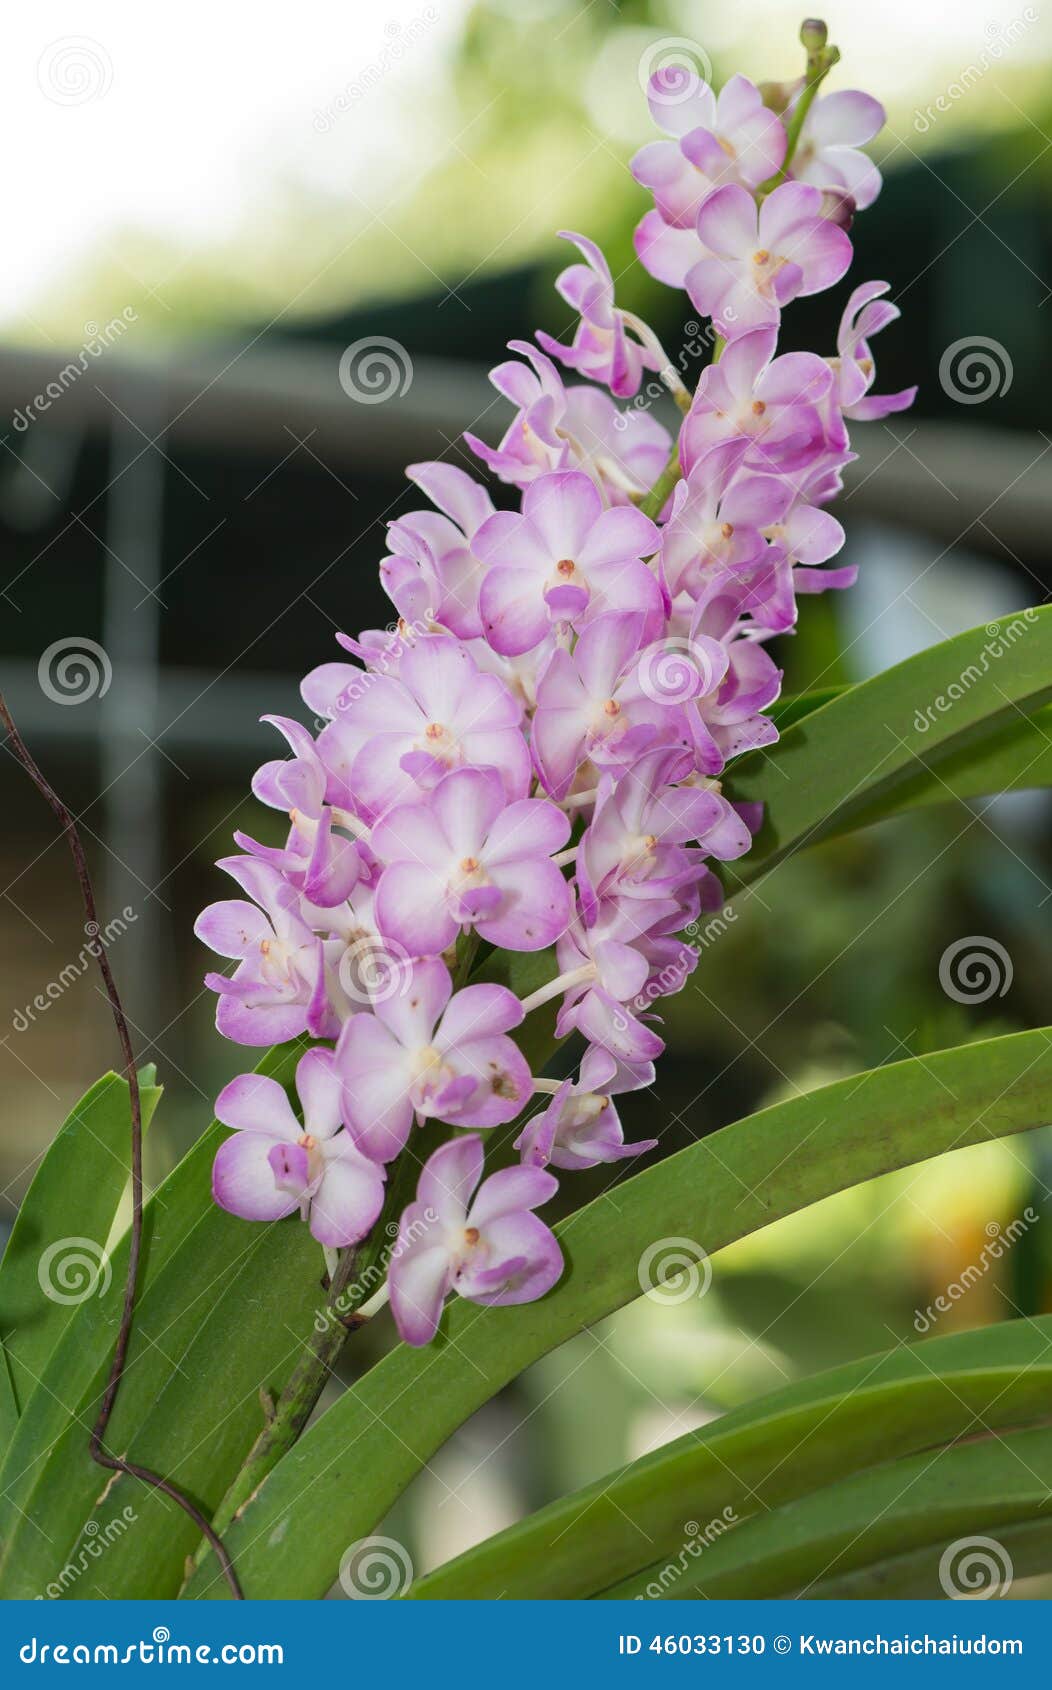 Light Pink Hybrid Vanda Orchid Flower Stock Photo - Image of floral,  garden: 46033130